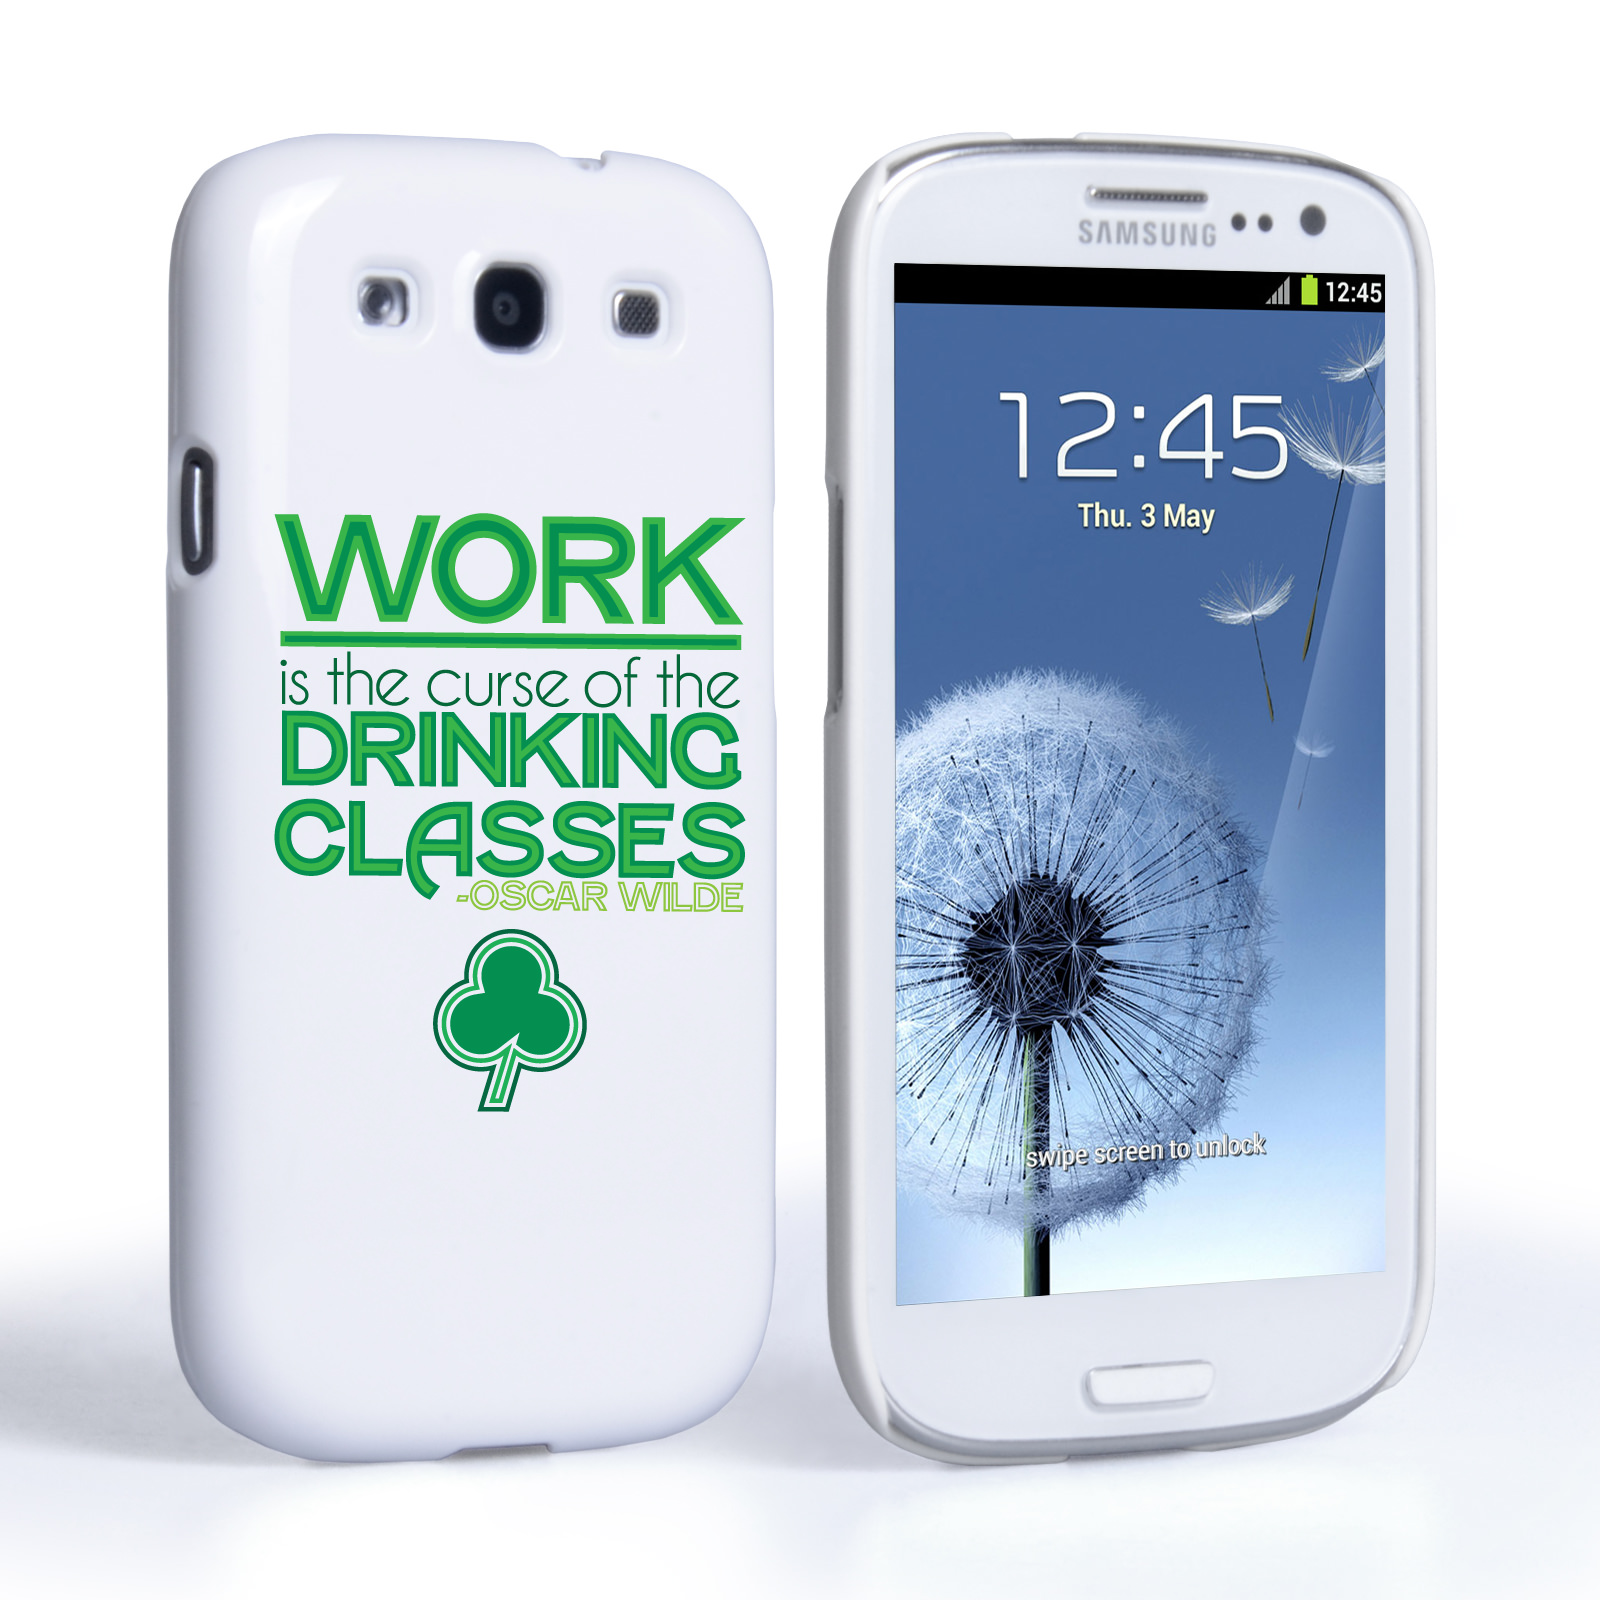 Caseflex Samsung Galaxy S3 Mini Wilde Drinking Classes Quote Hard Case – White and Green